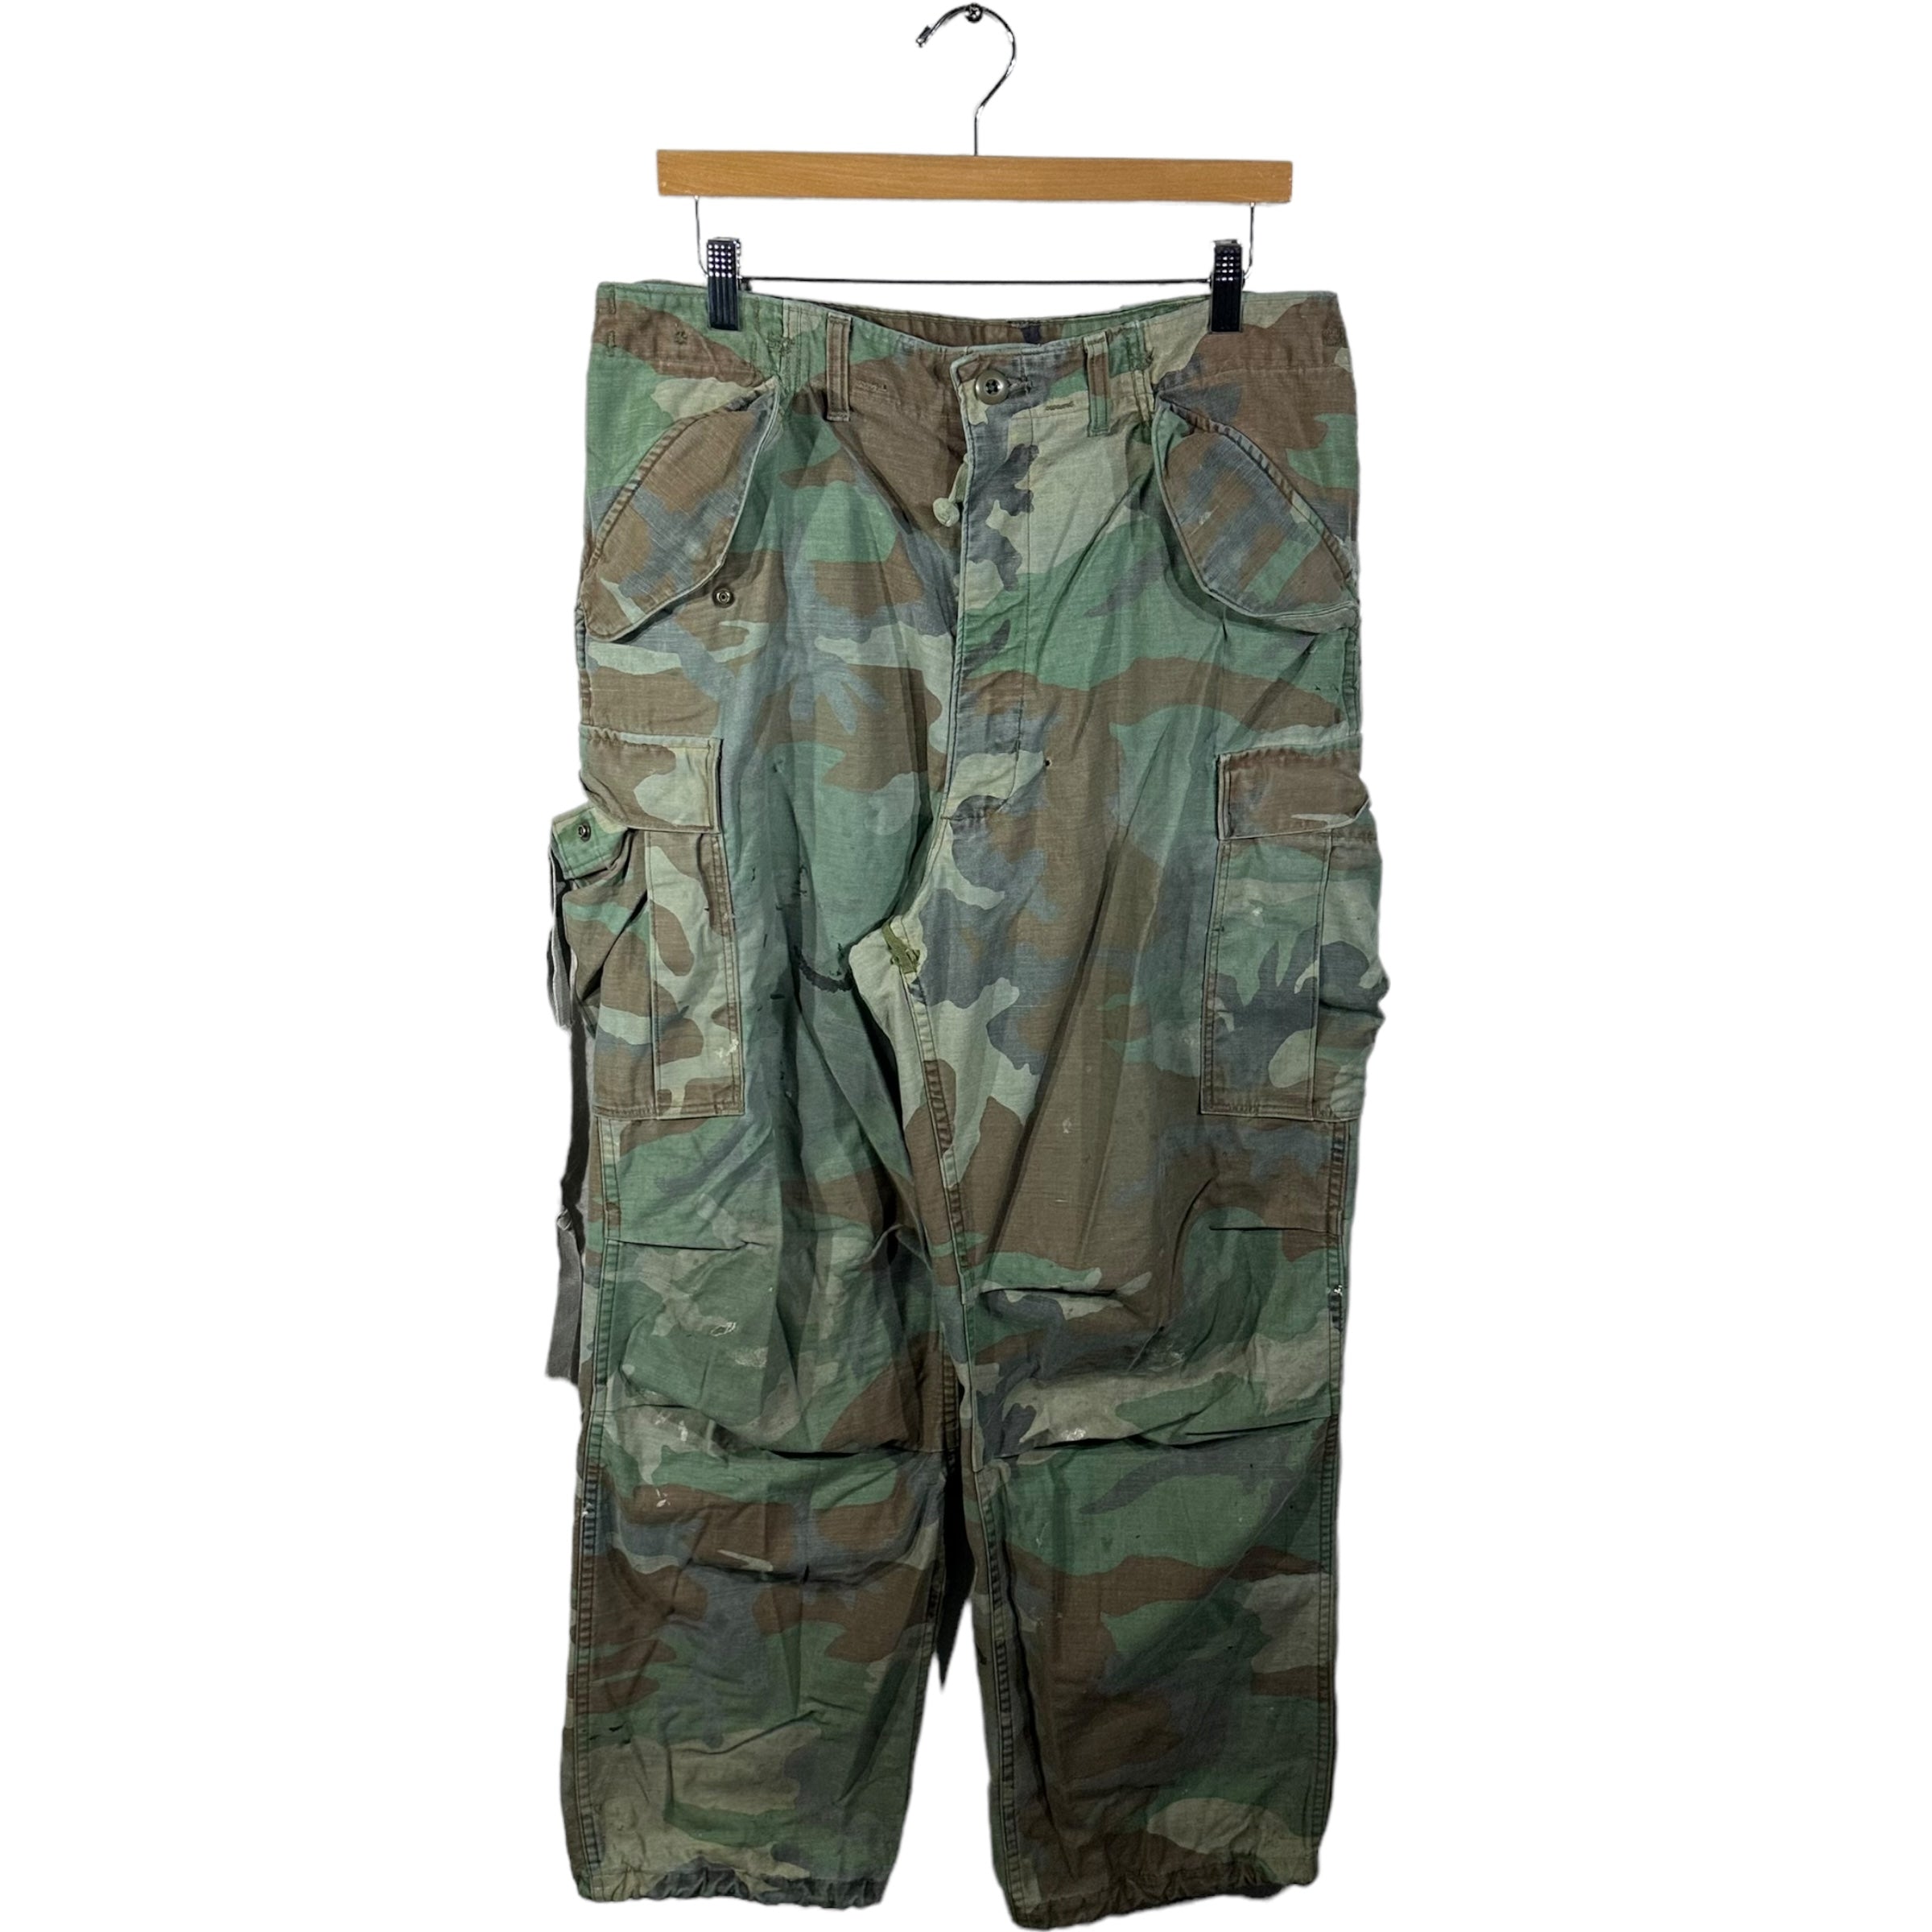 Vintage Military Cargo Camo Pants